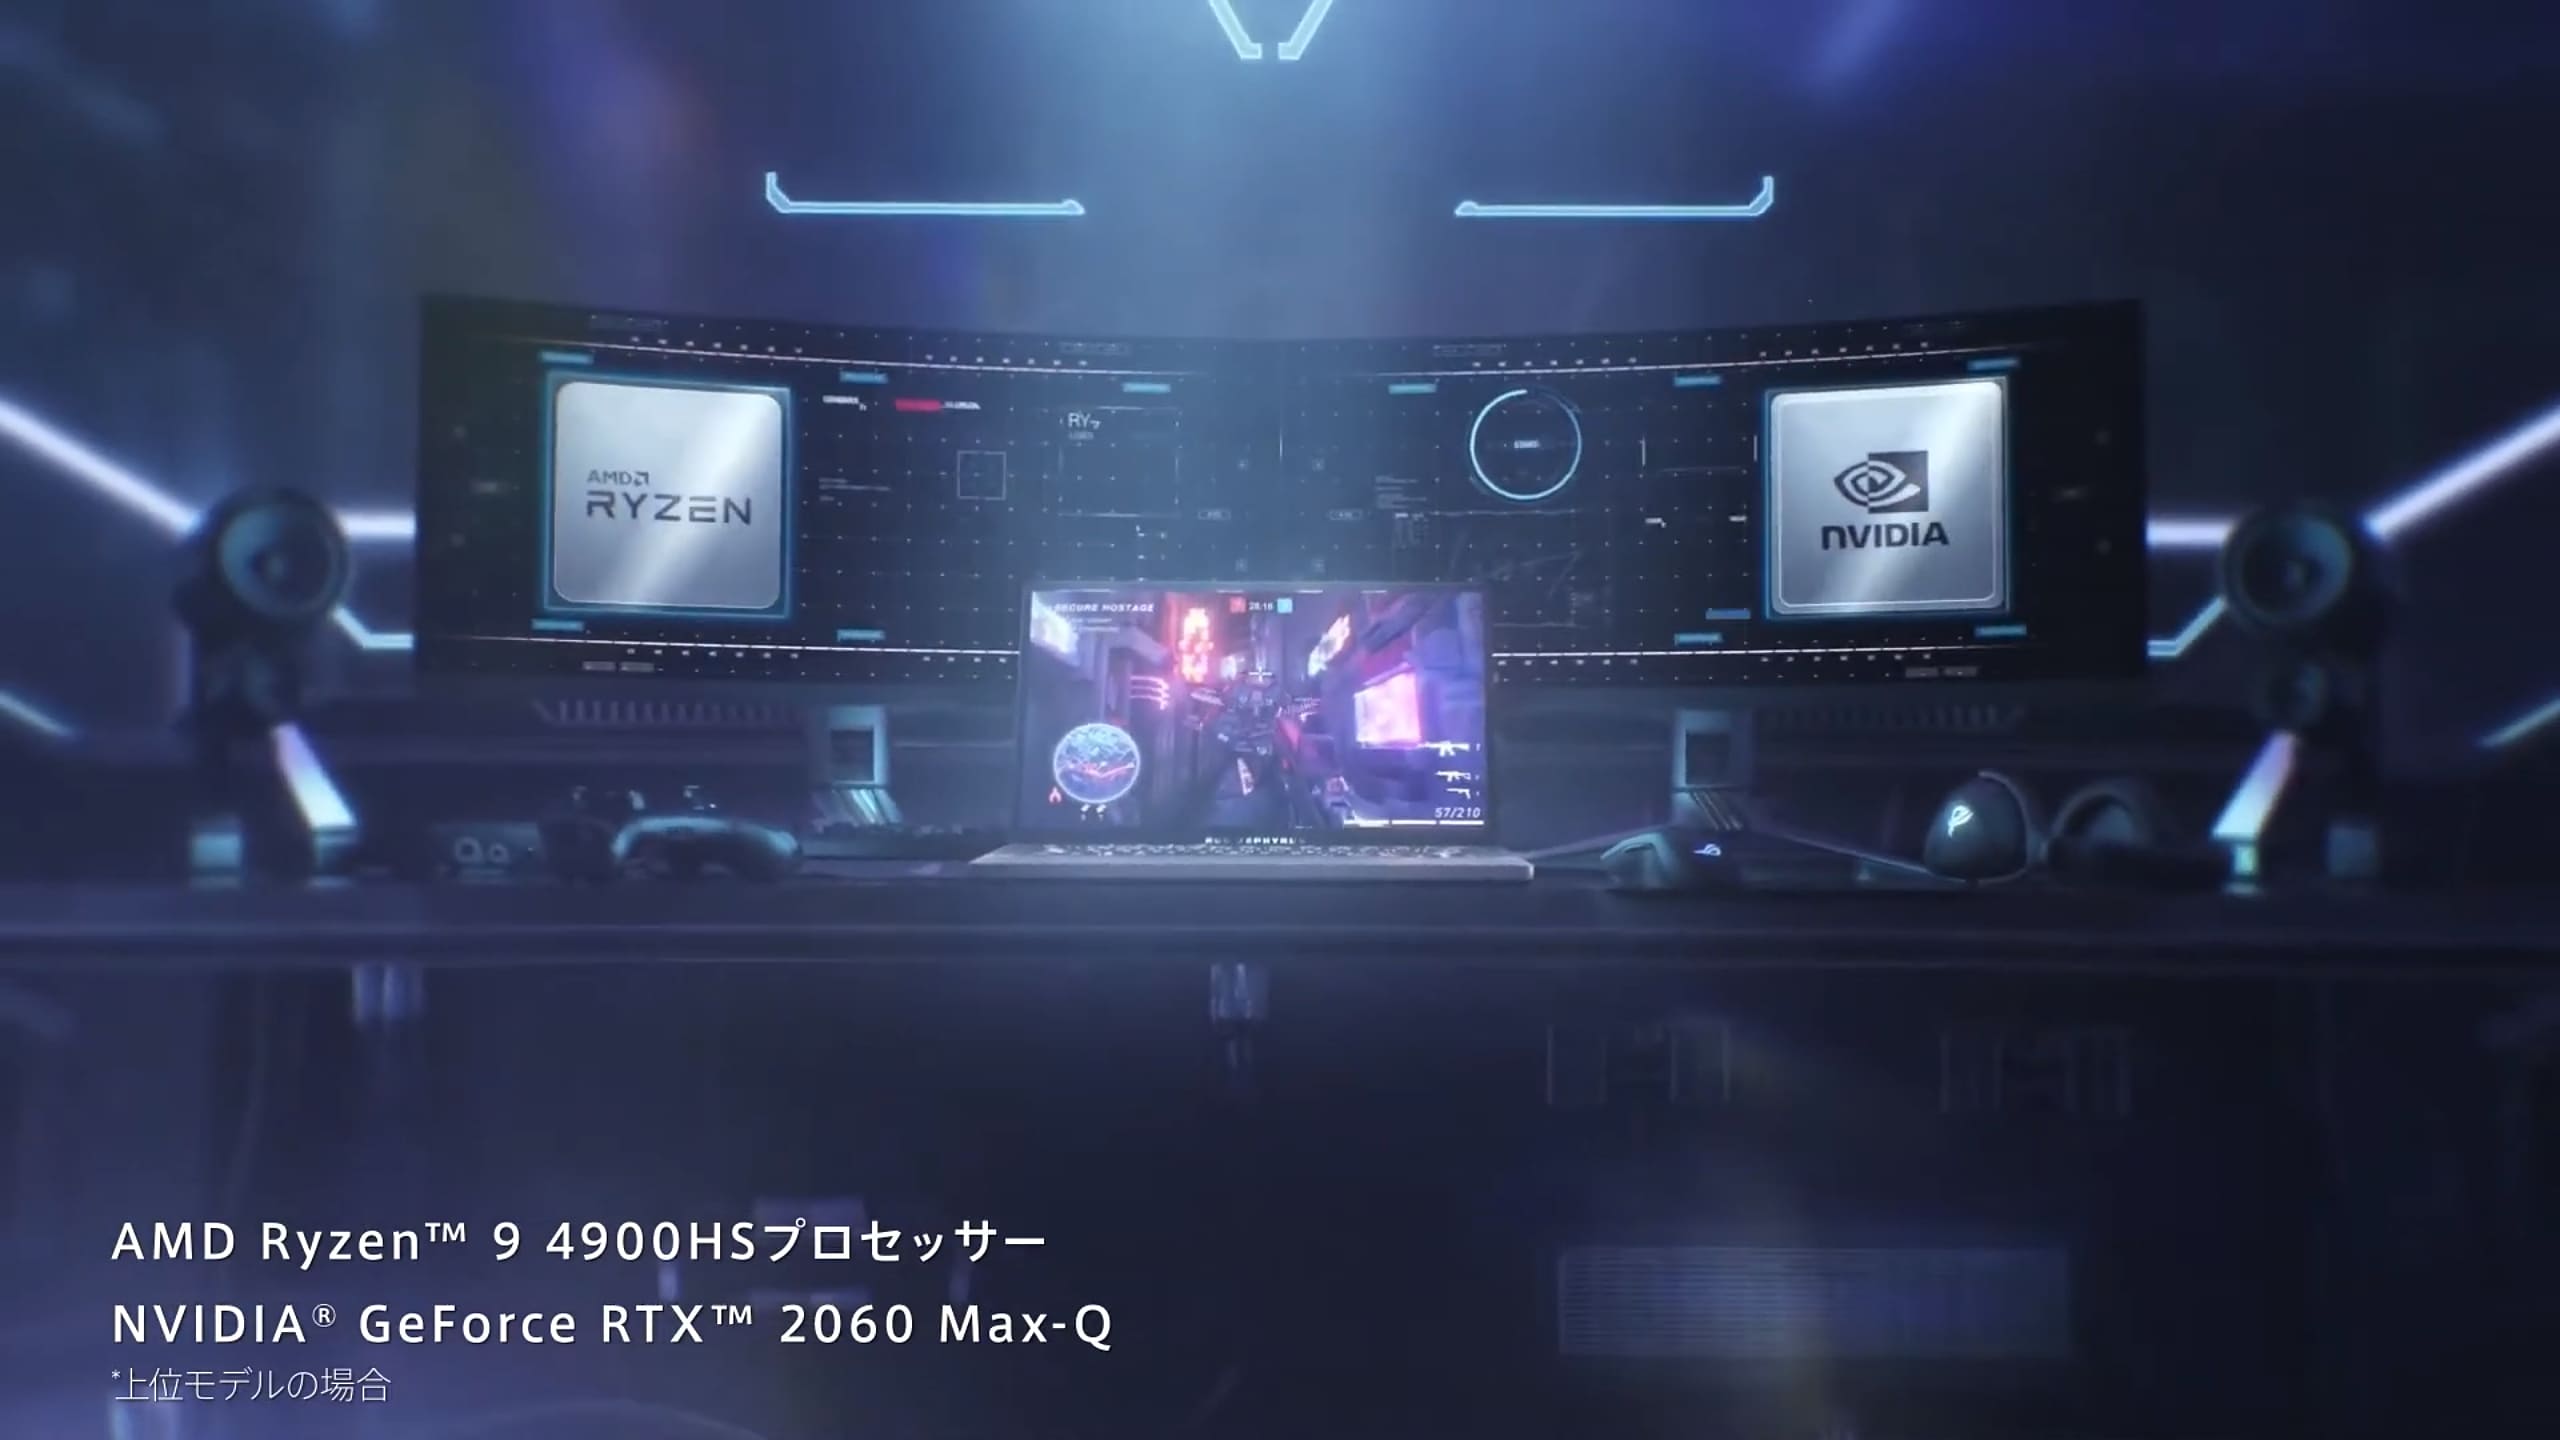 AMD RYZEN 9 R9-4900HS, NVIDIA GeForce RTX 2060 Max-Q 安裝在上款